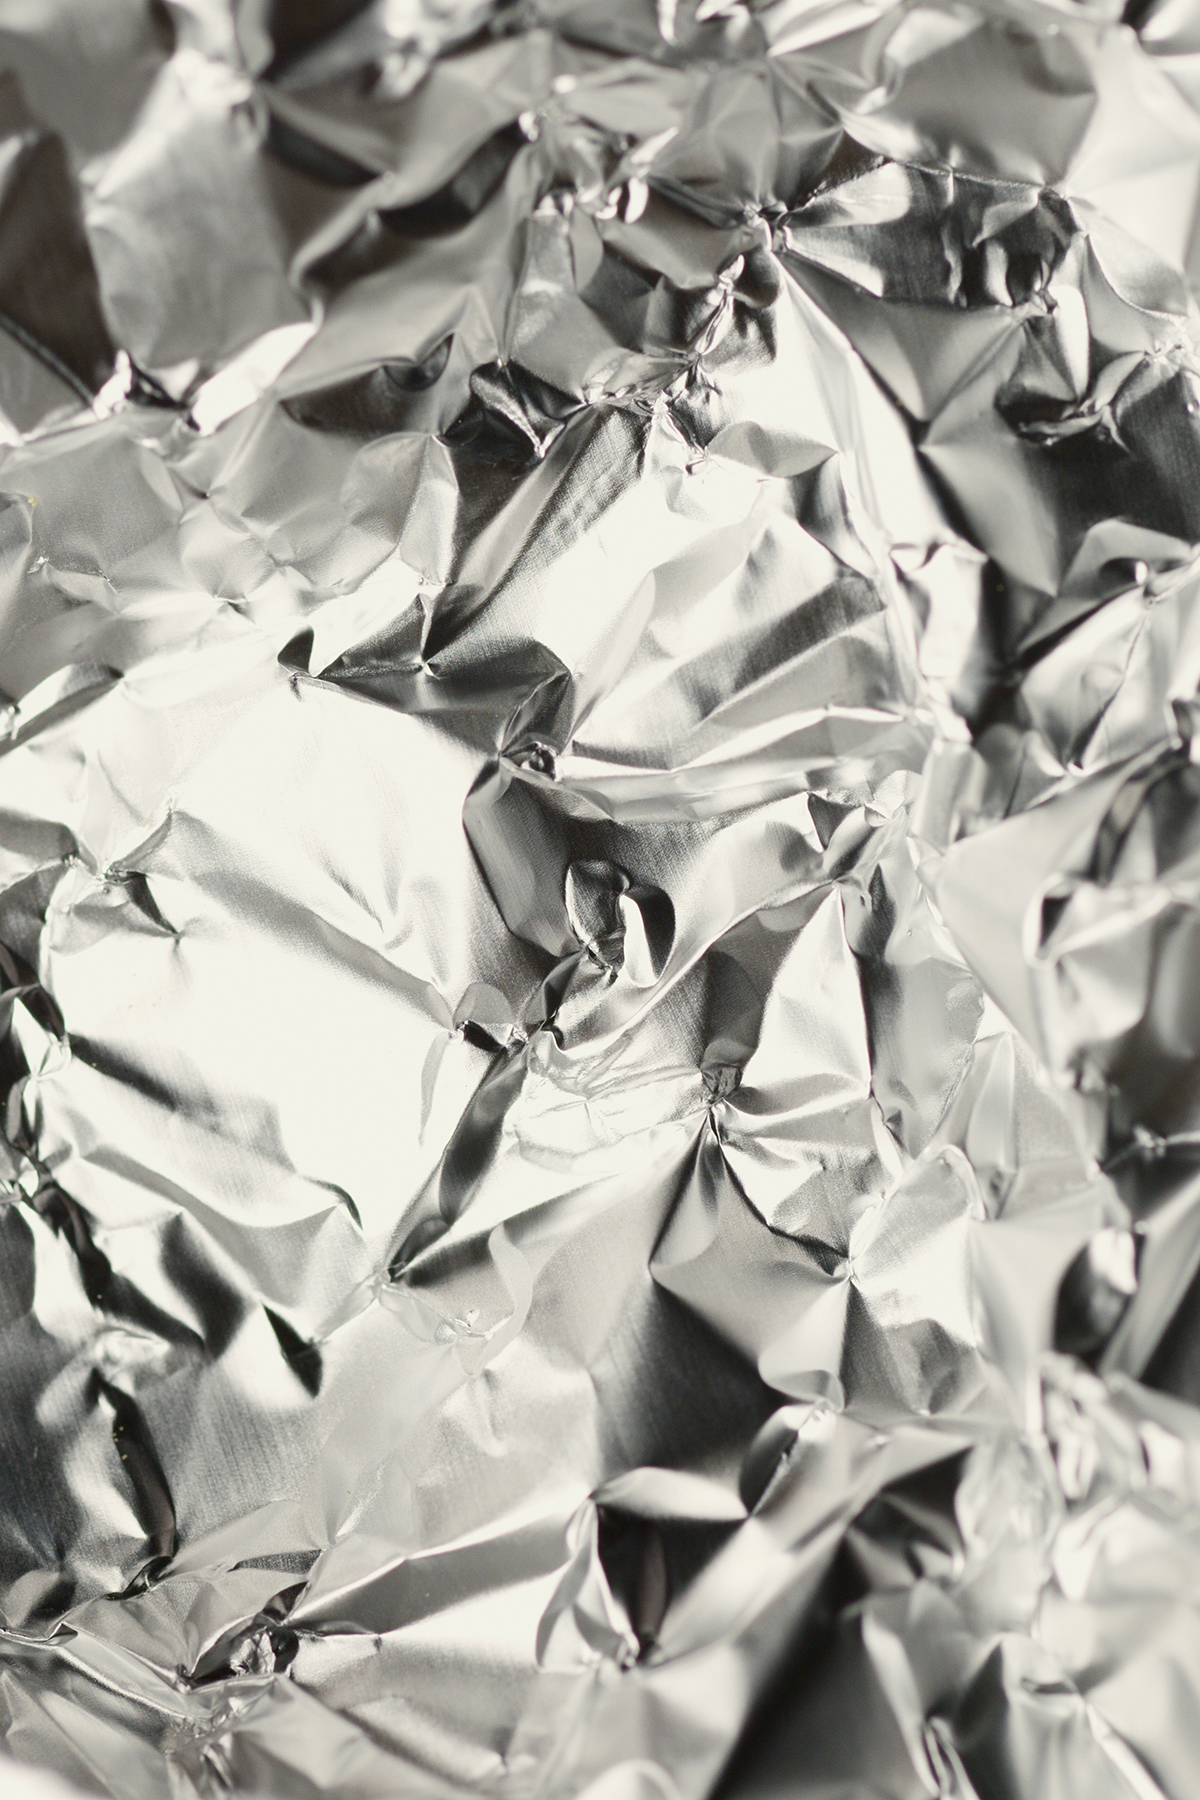 a close up of shiny, wrinkled aluminum foil.